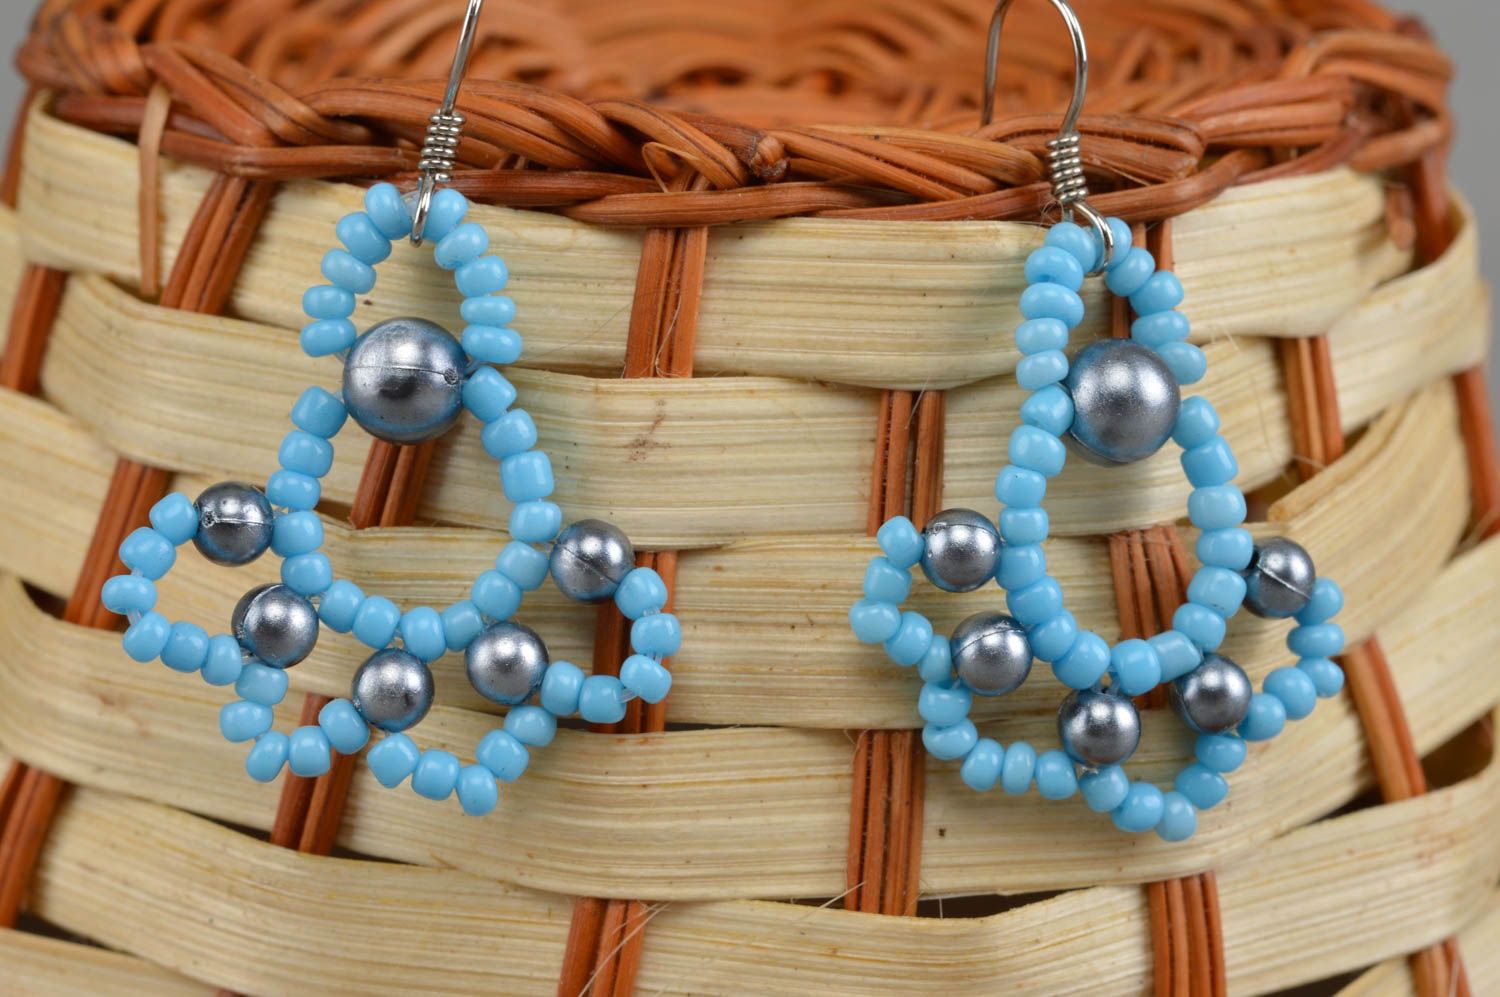 Beautiful handmade beaded earrings unusual jewelry designs bead weaving ideas photo 1